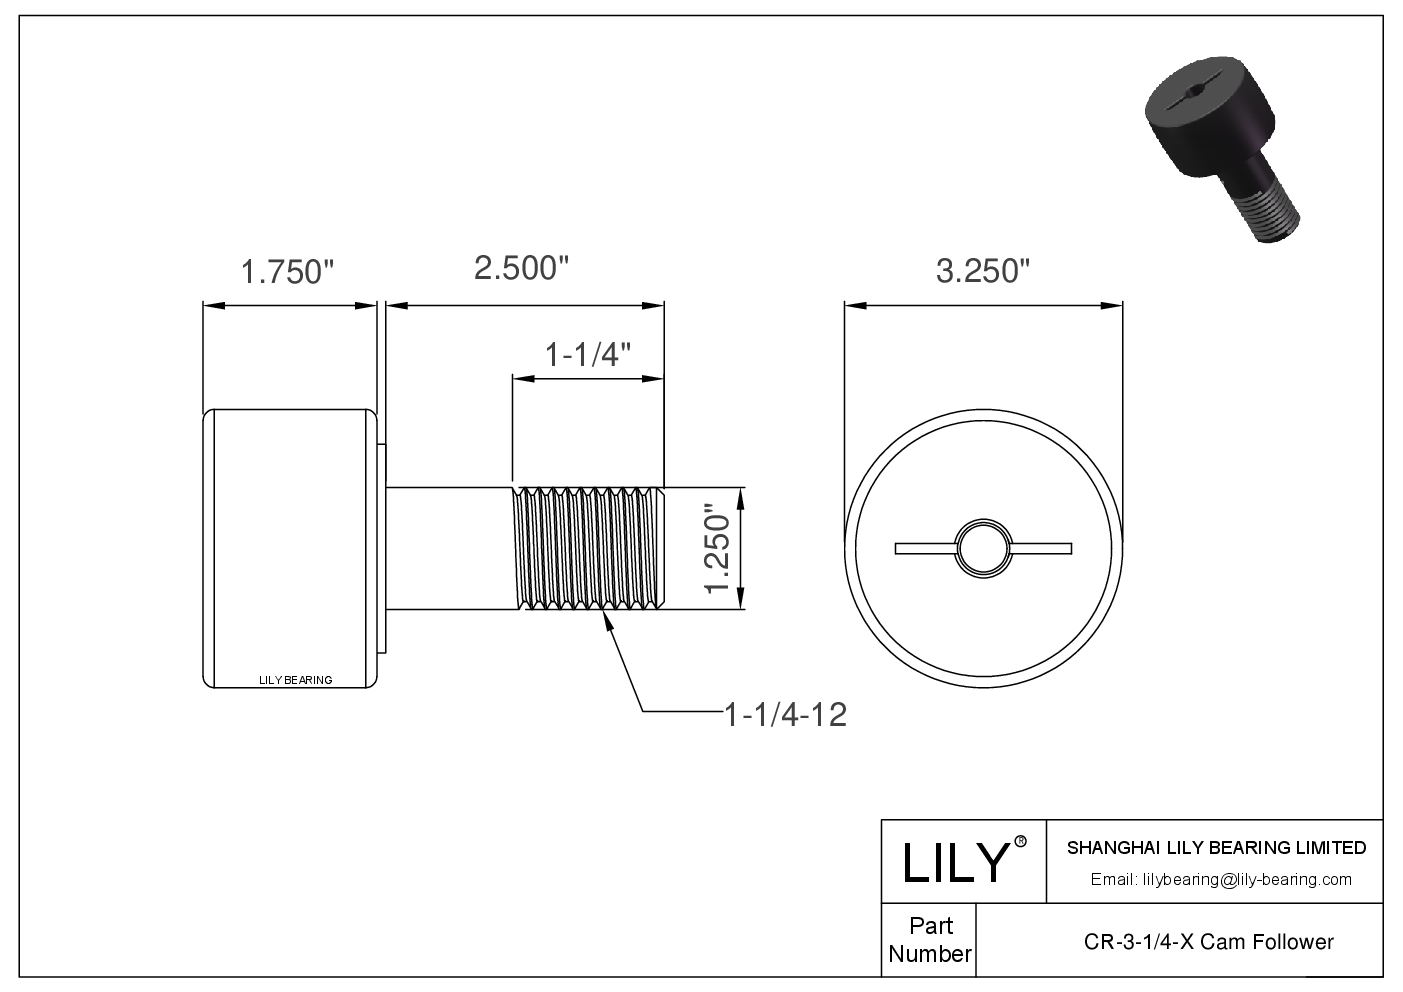 CR-3-1/4-X 螺柱式英制凸轮从动件 CAD图形